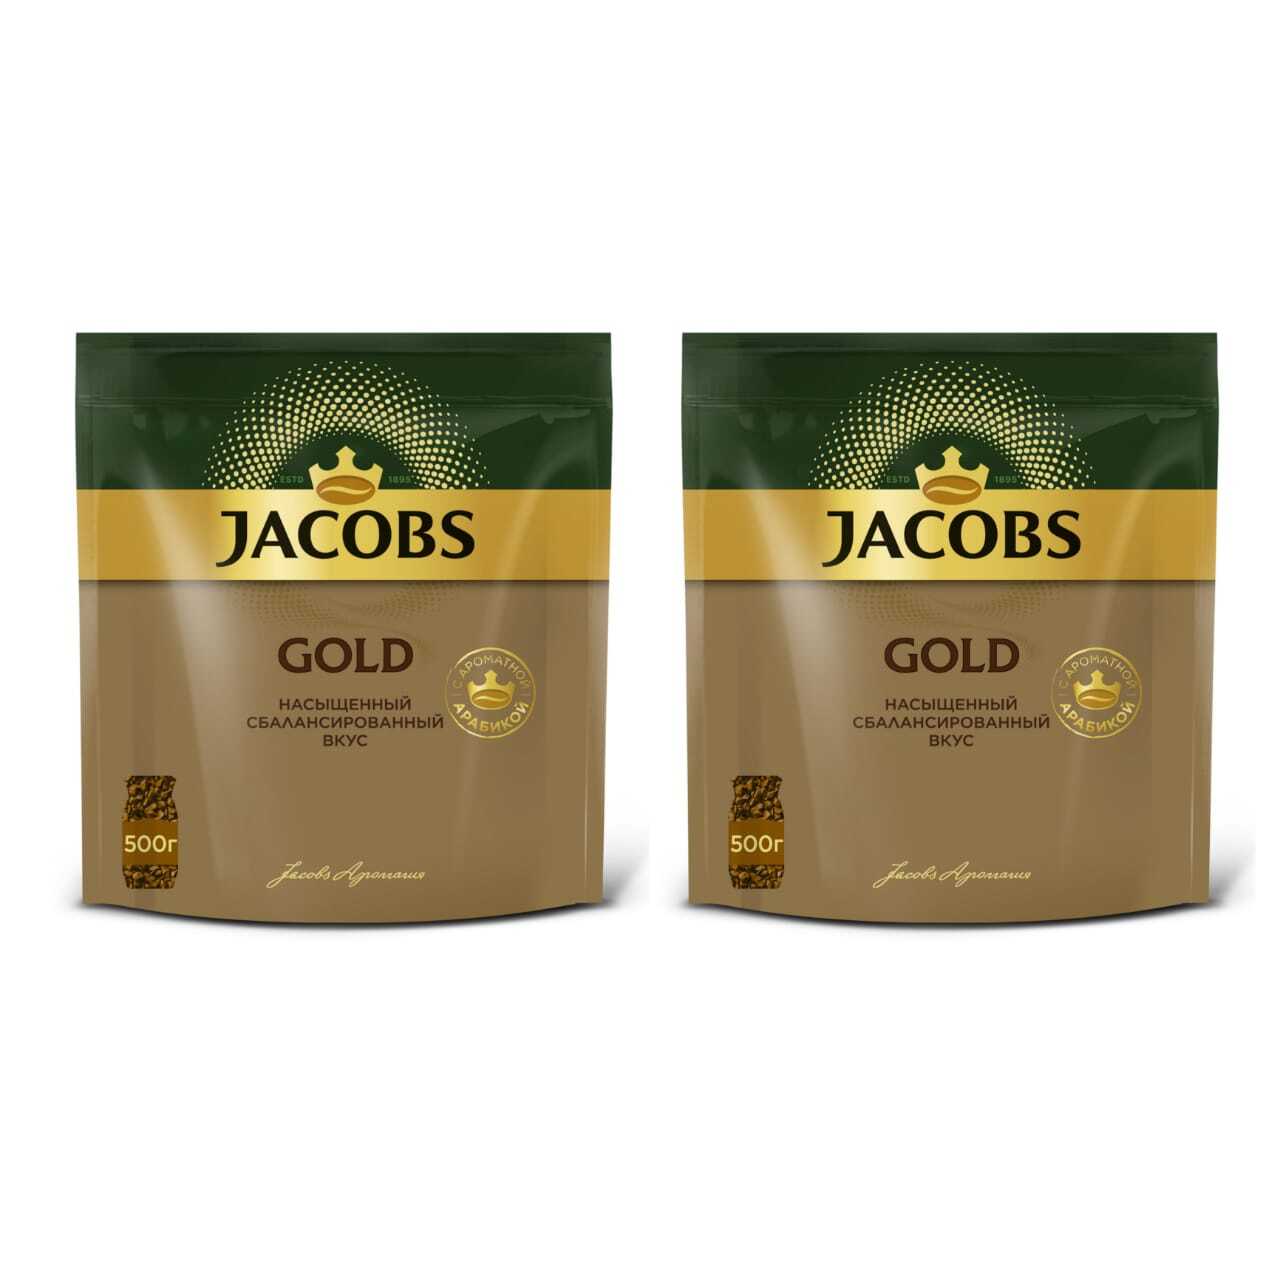 Купить кофе голд 500 гр. Jacobs Gold 500. Якобс Голд 500гр. Jacobs Голд 500 гр. Кофе Якобс Голд.